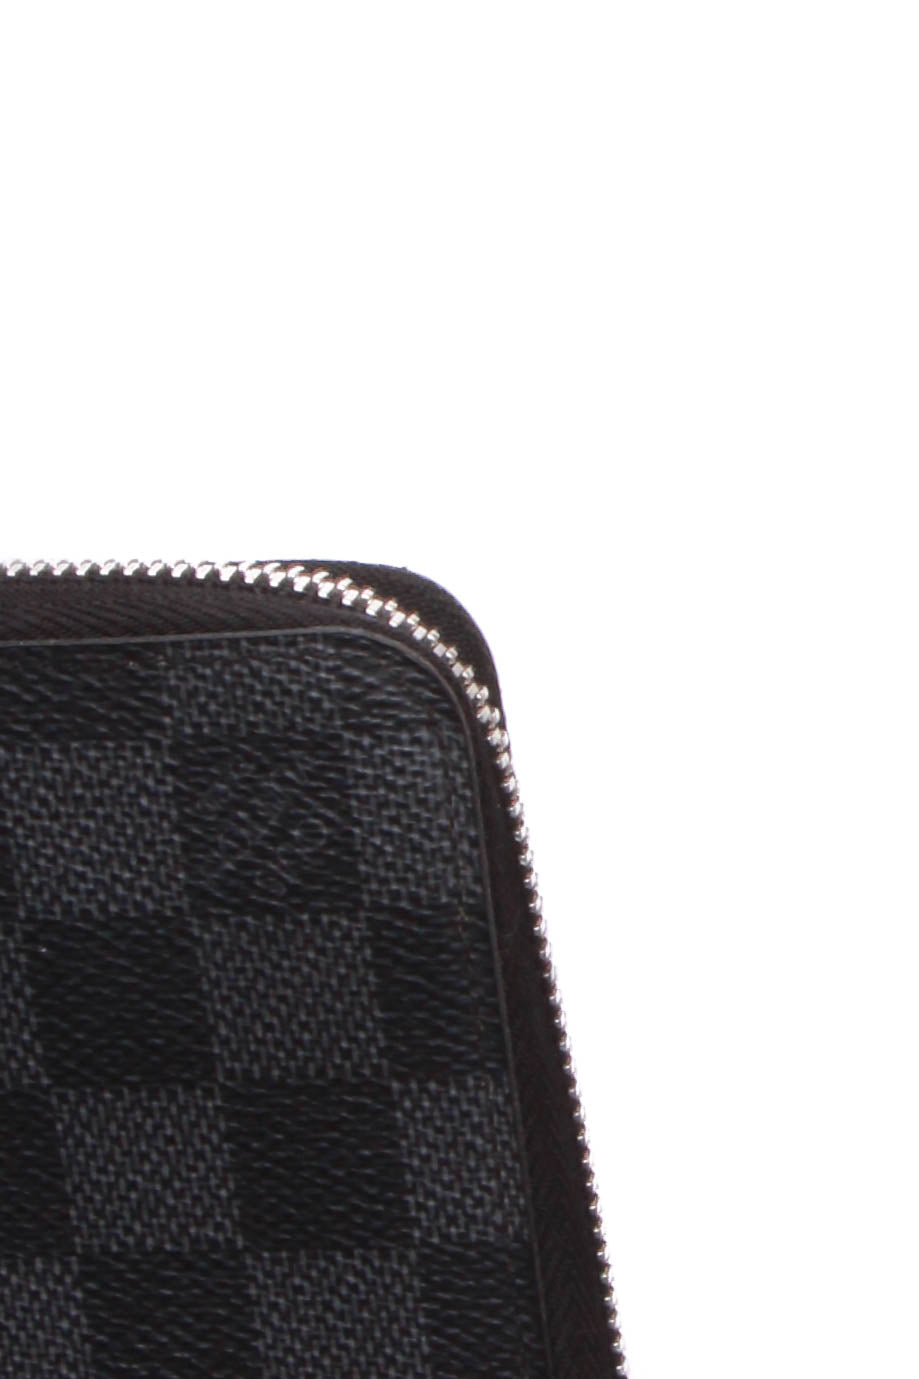 Zippy Wallet Vertical Damier Graphite Canvas - Men - Small Leather Goods